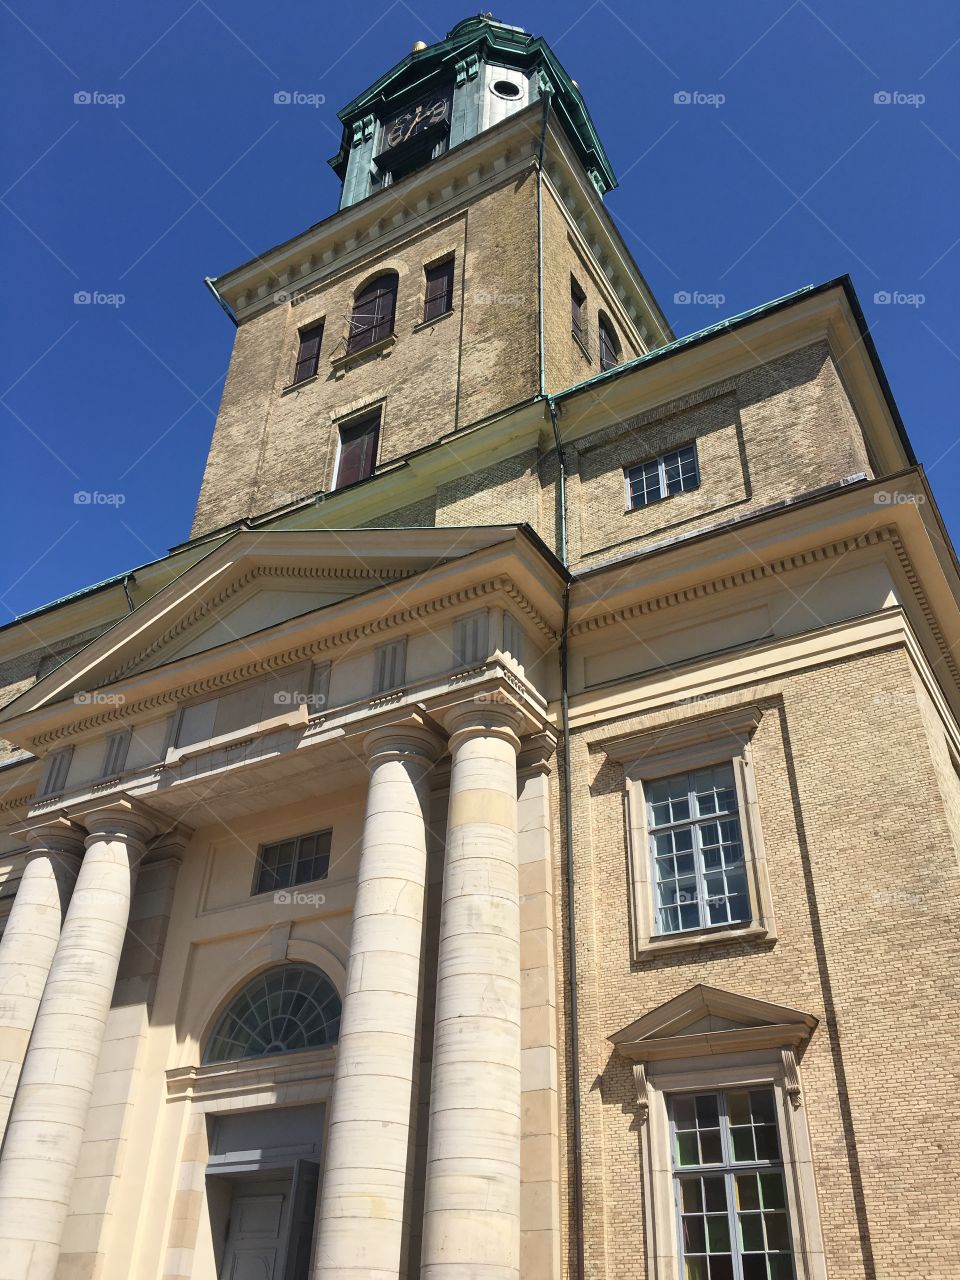 Domkyrkan in Gothenburg, Sweden 